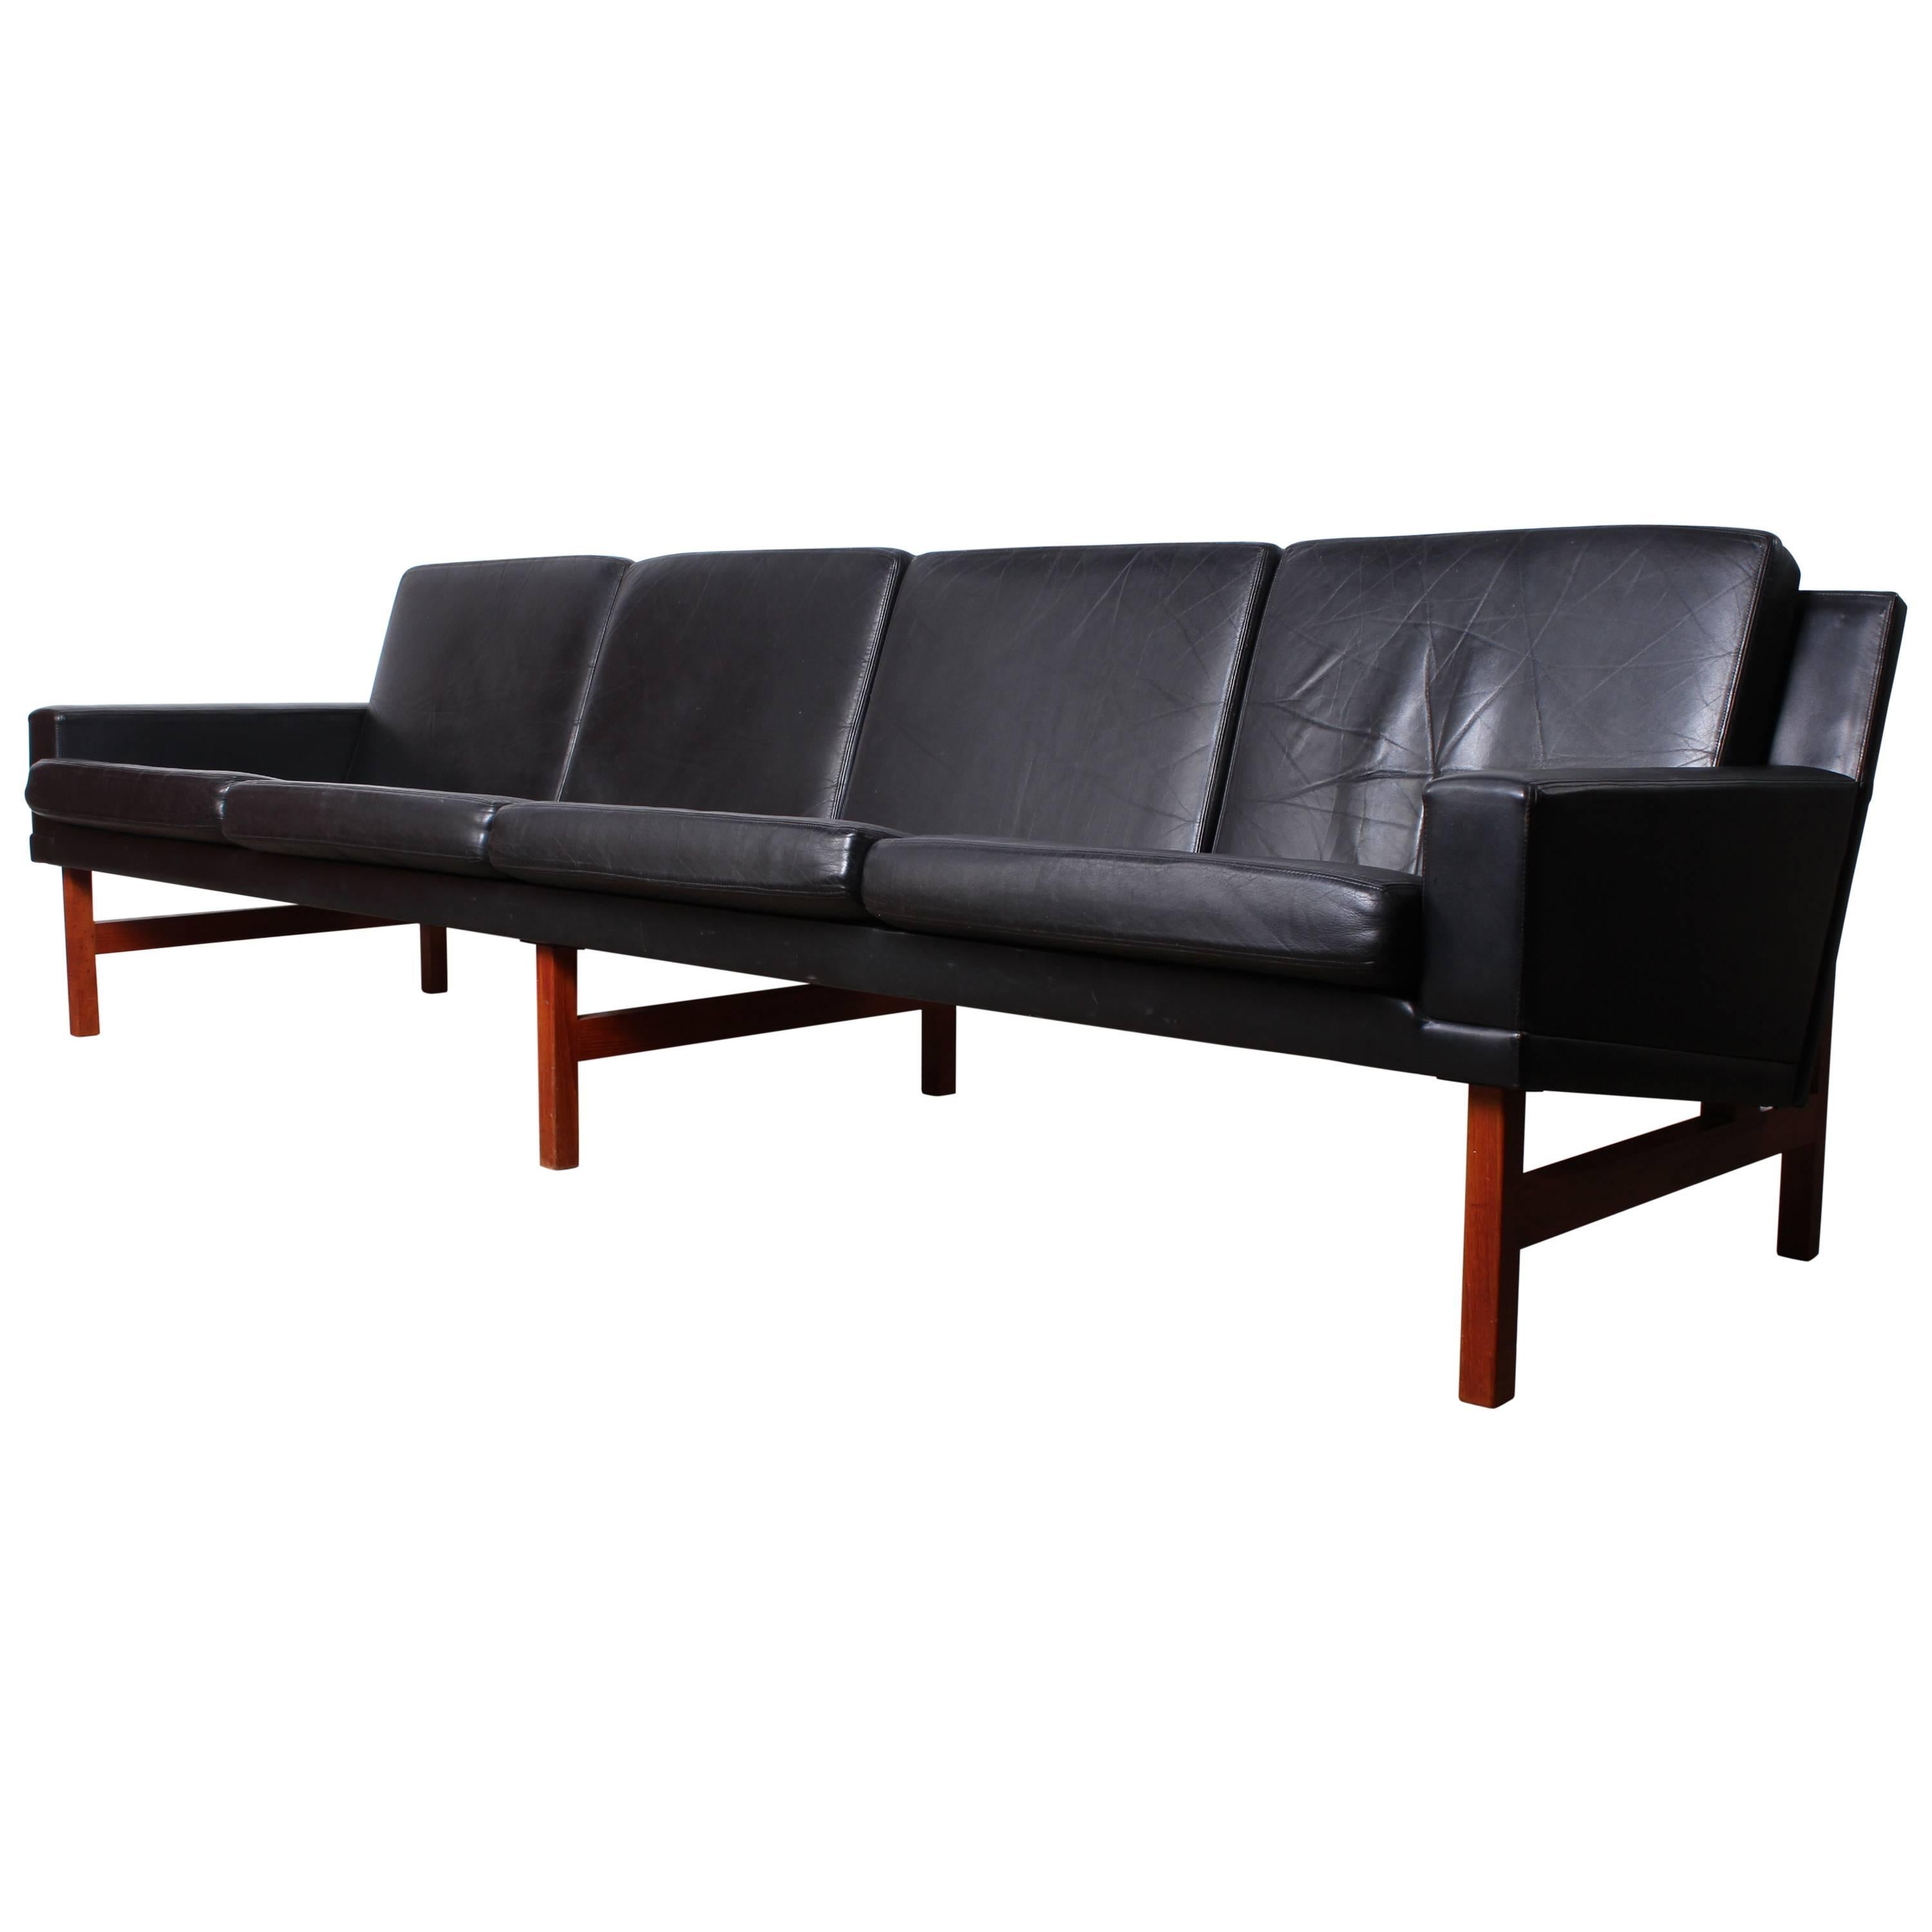 Long Danish Sofa in Leather and Teak